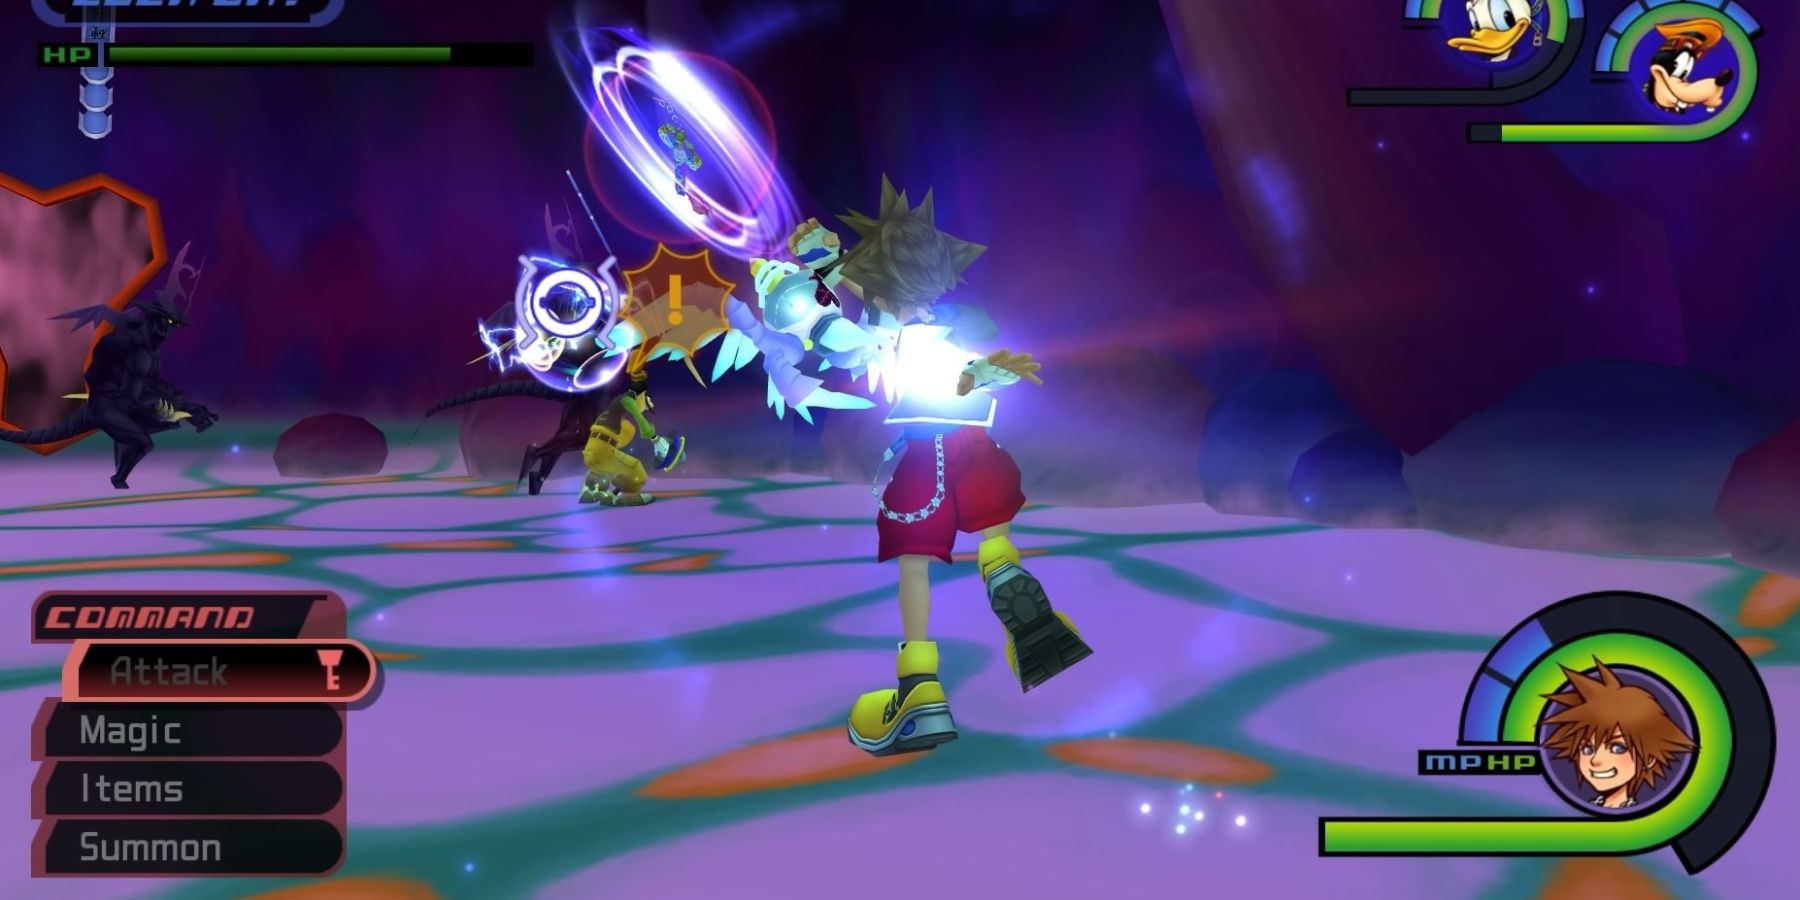 Sora using Strike Raid in Kingdom Hearts